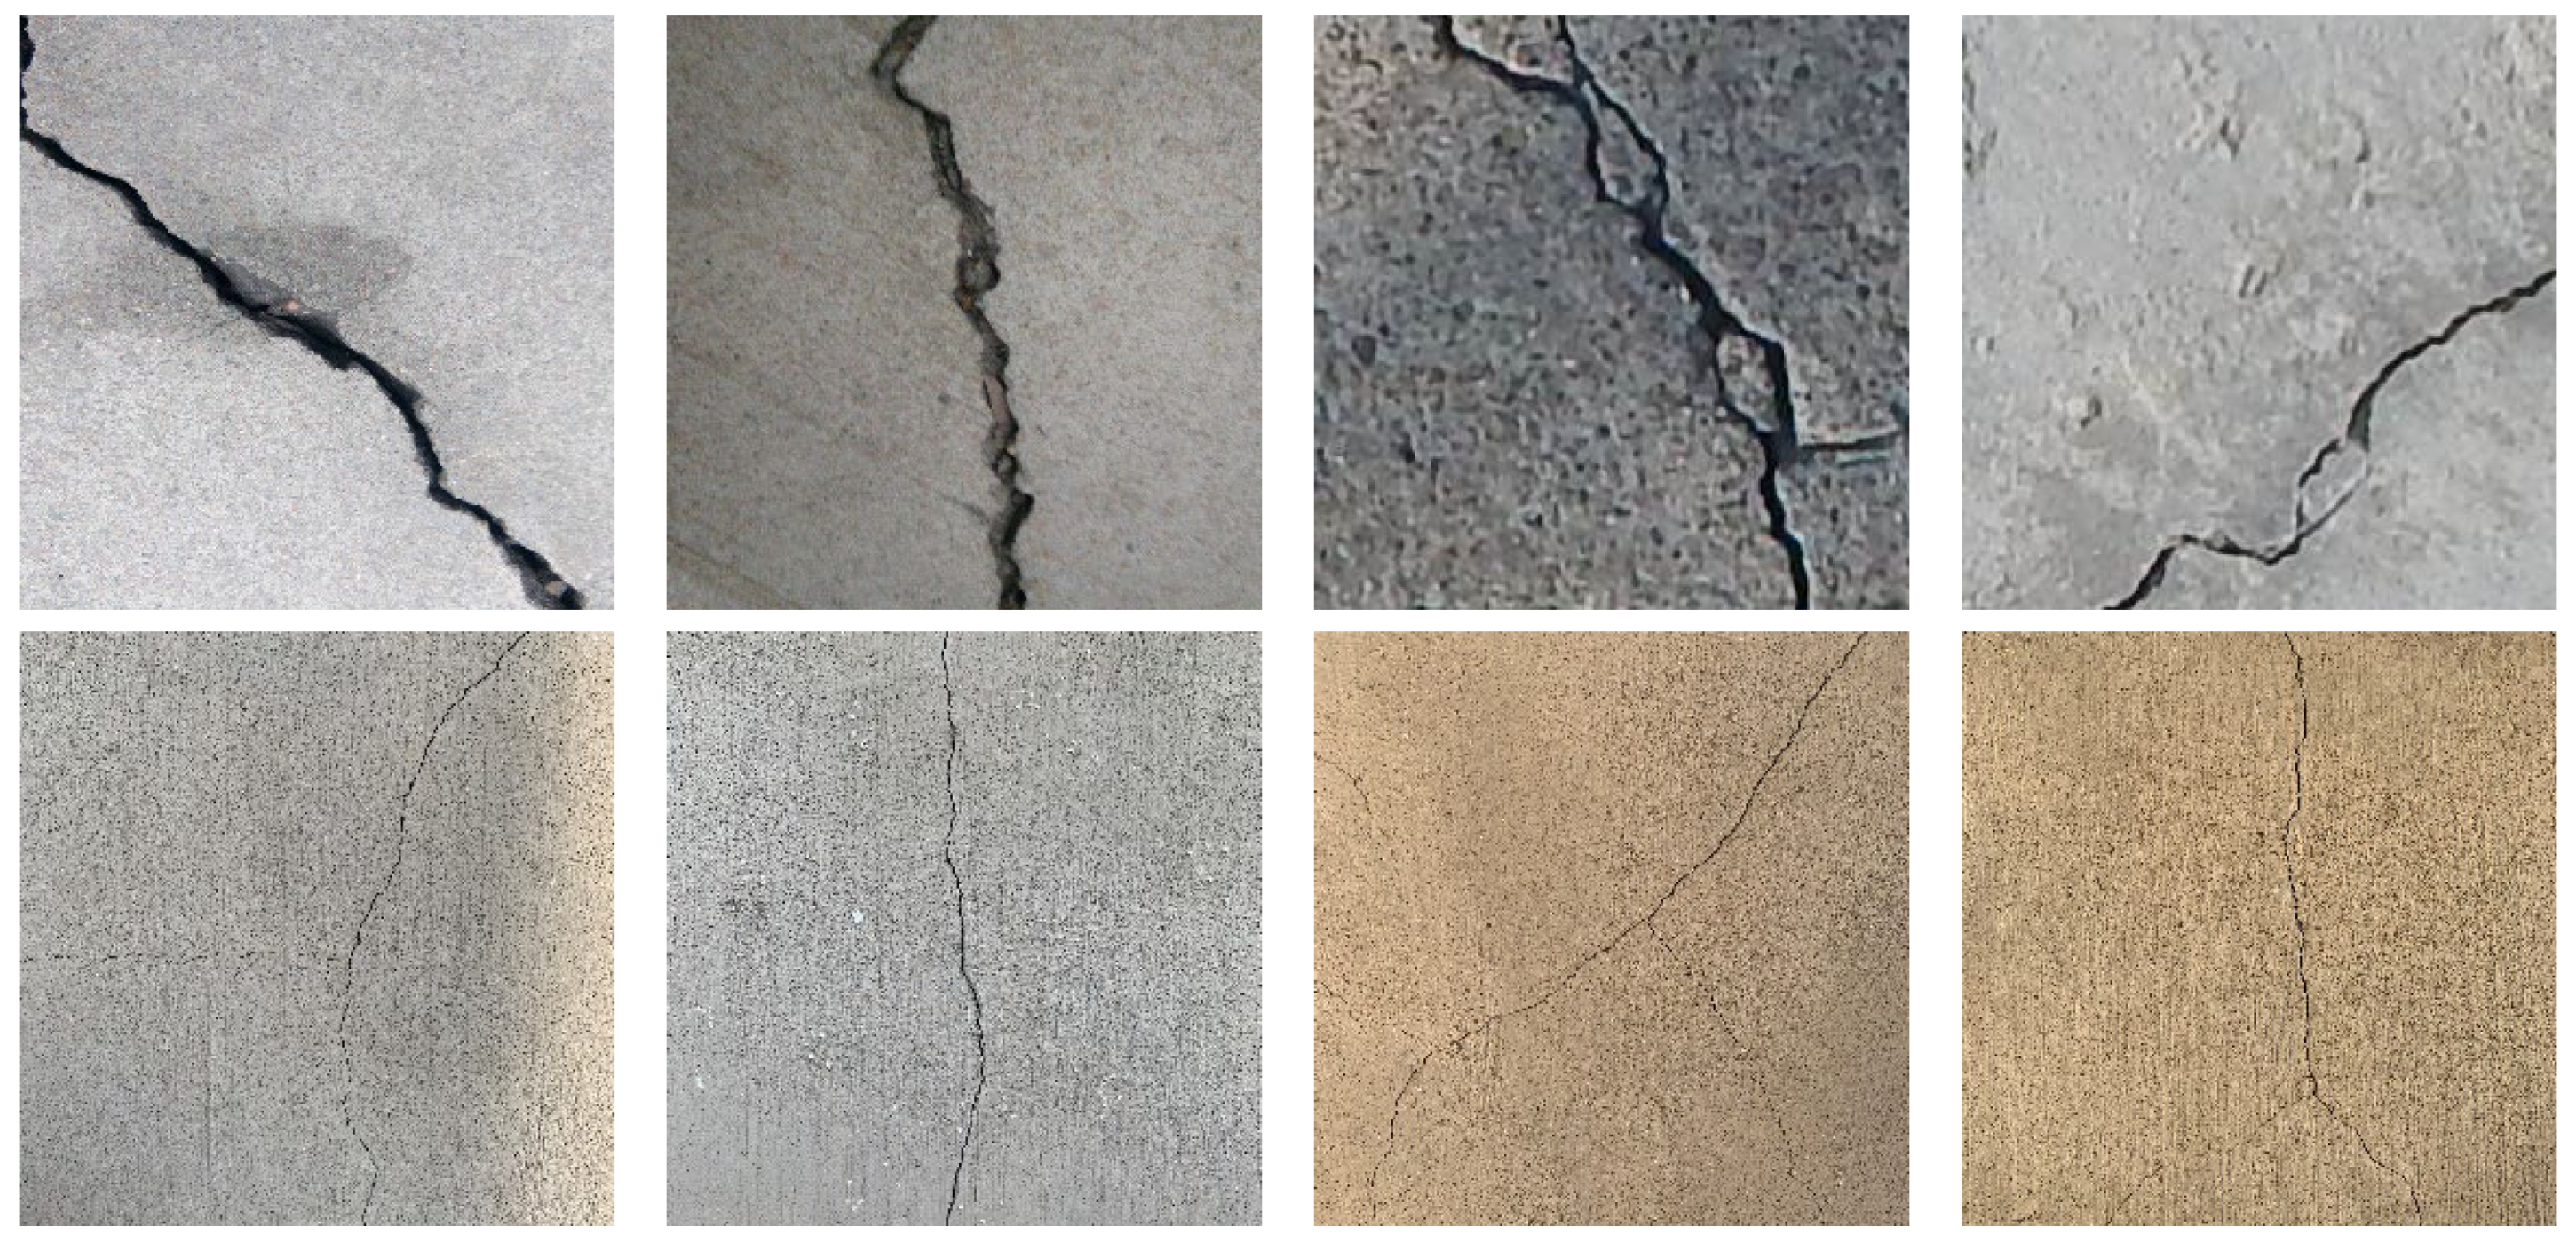 Surface preparation for concrete crack monitoring